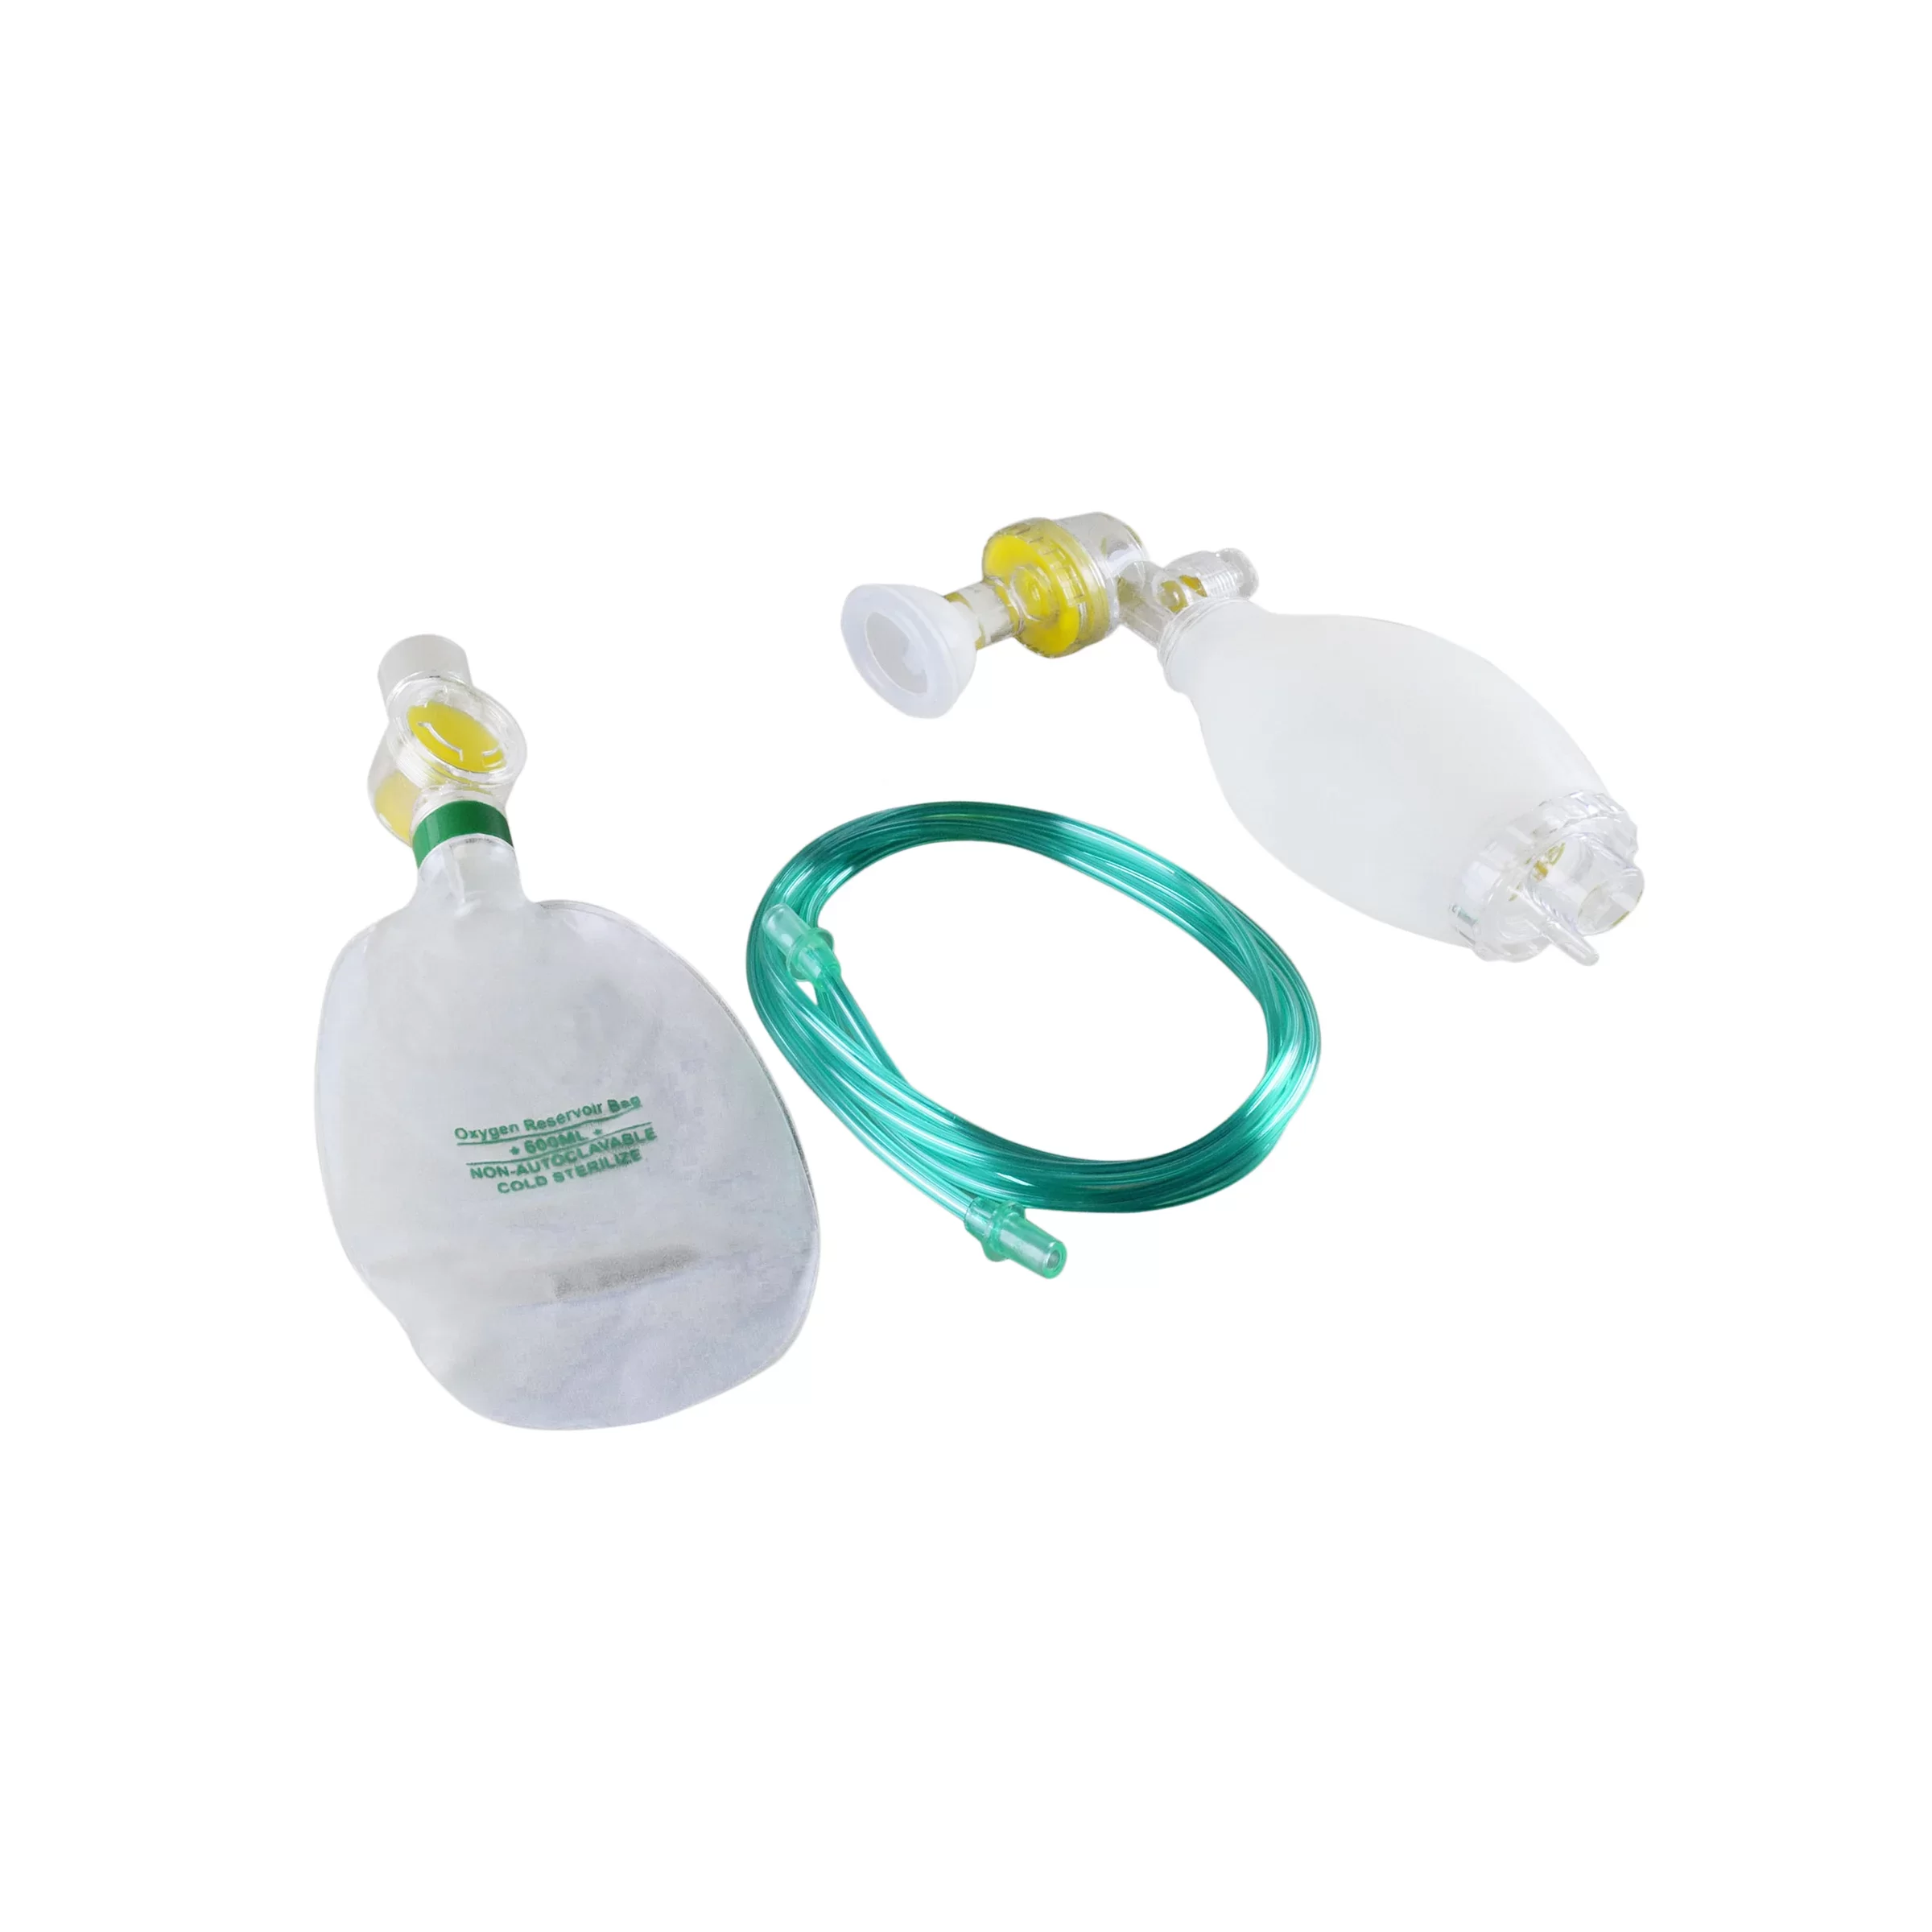 Silicone resuscitator (ambu bag) - Sigmed